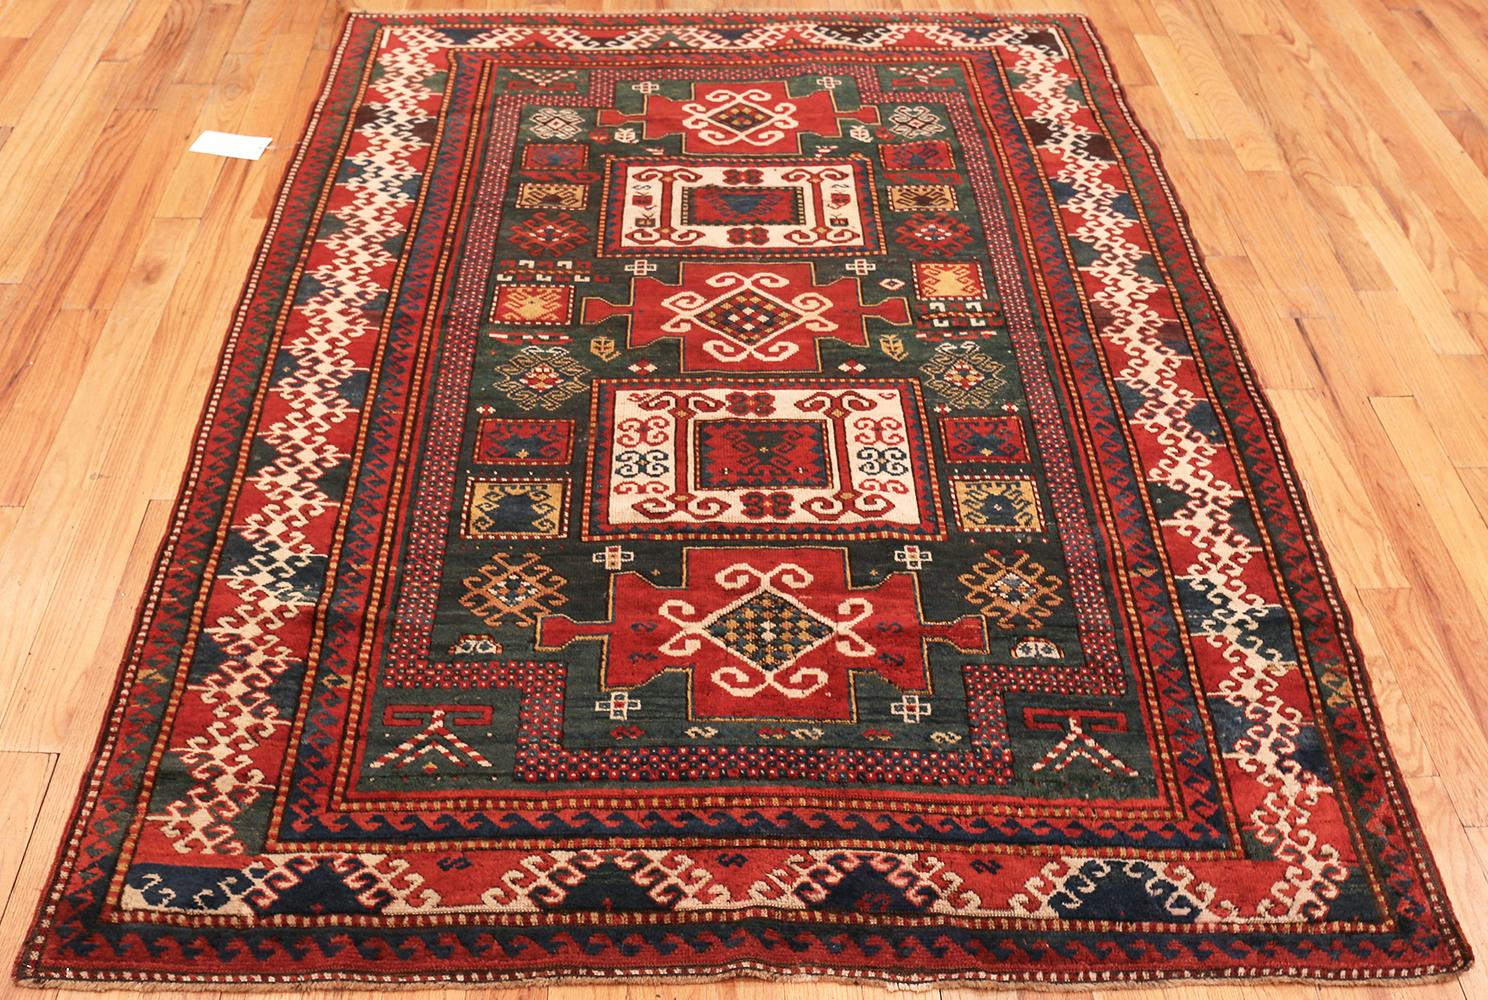 Nazmiyal Collection Antique Caucasian Kazak Rug. Size: 5 ft 4 in x 7 ft 3